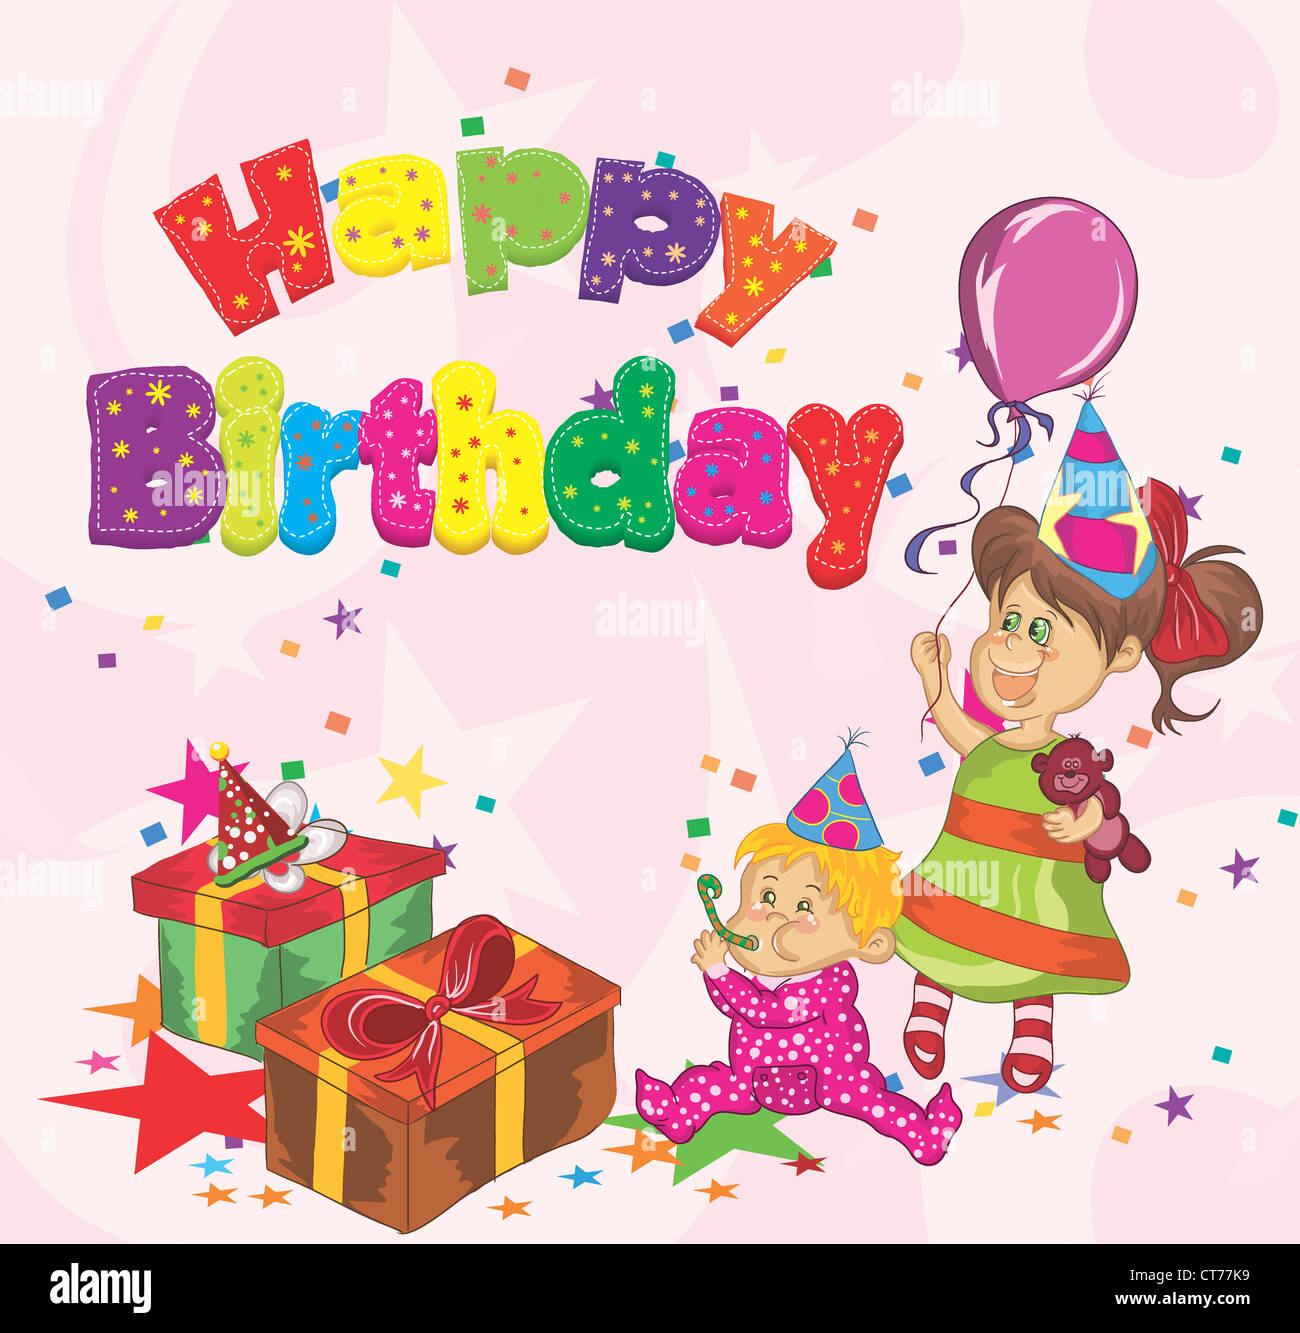 happy birthday vector illustration Stock Photo - Alamy